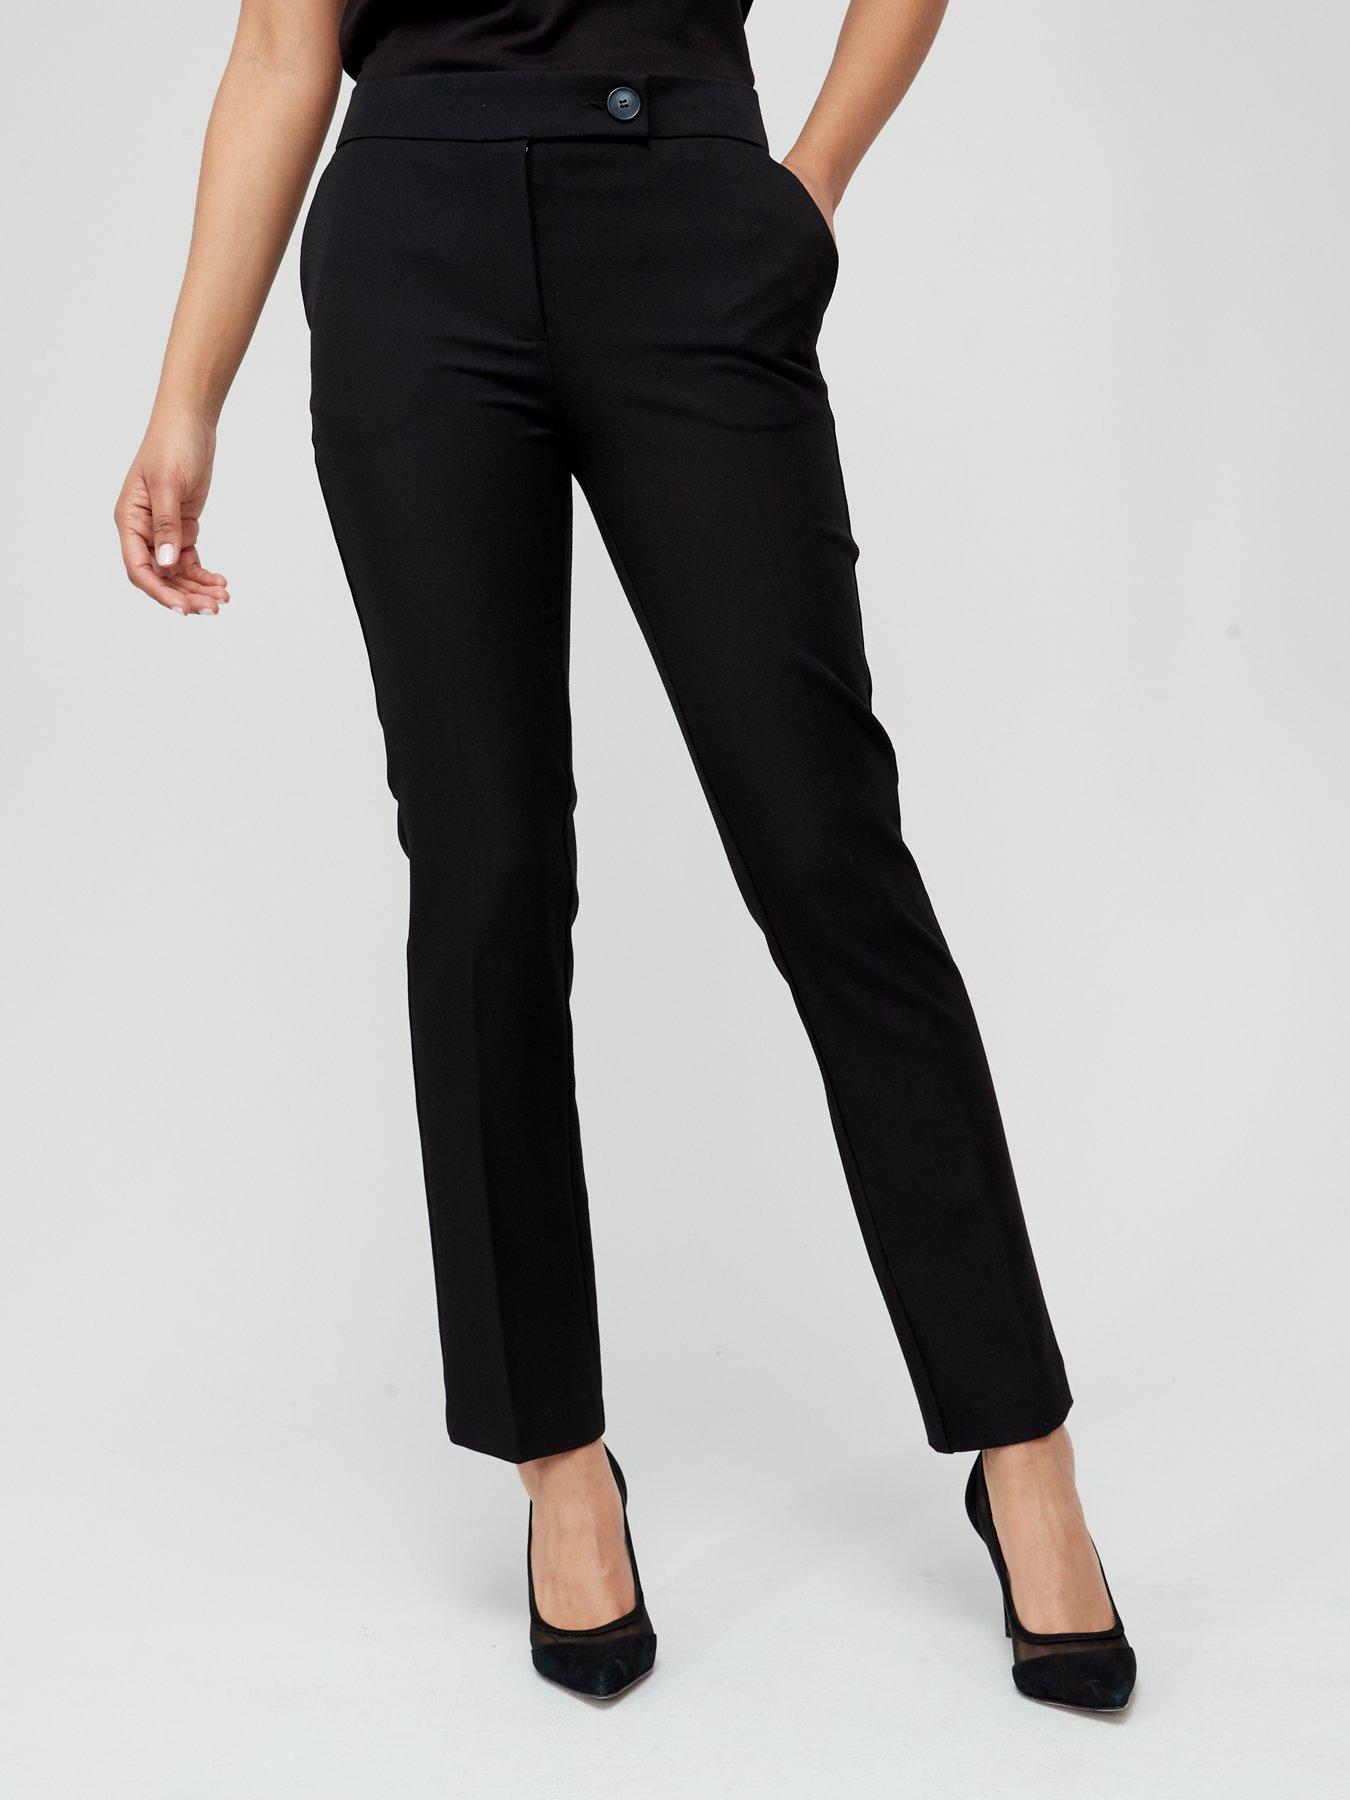 Women’s Ladies Formal Office Trouser or Workwear Pant Black